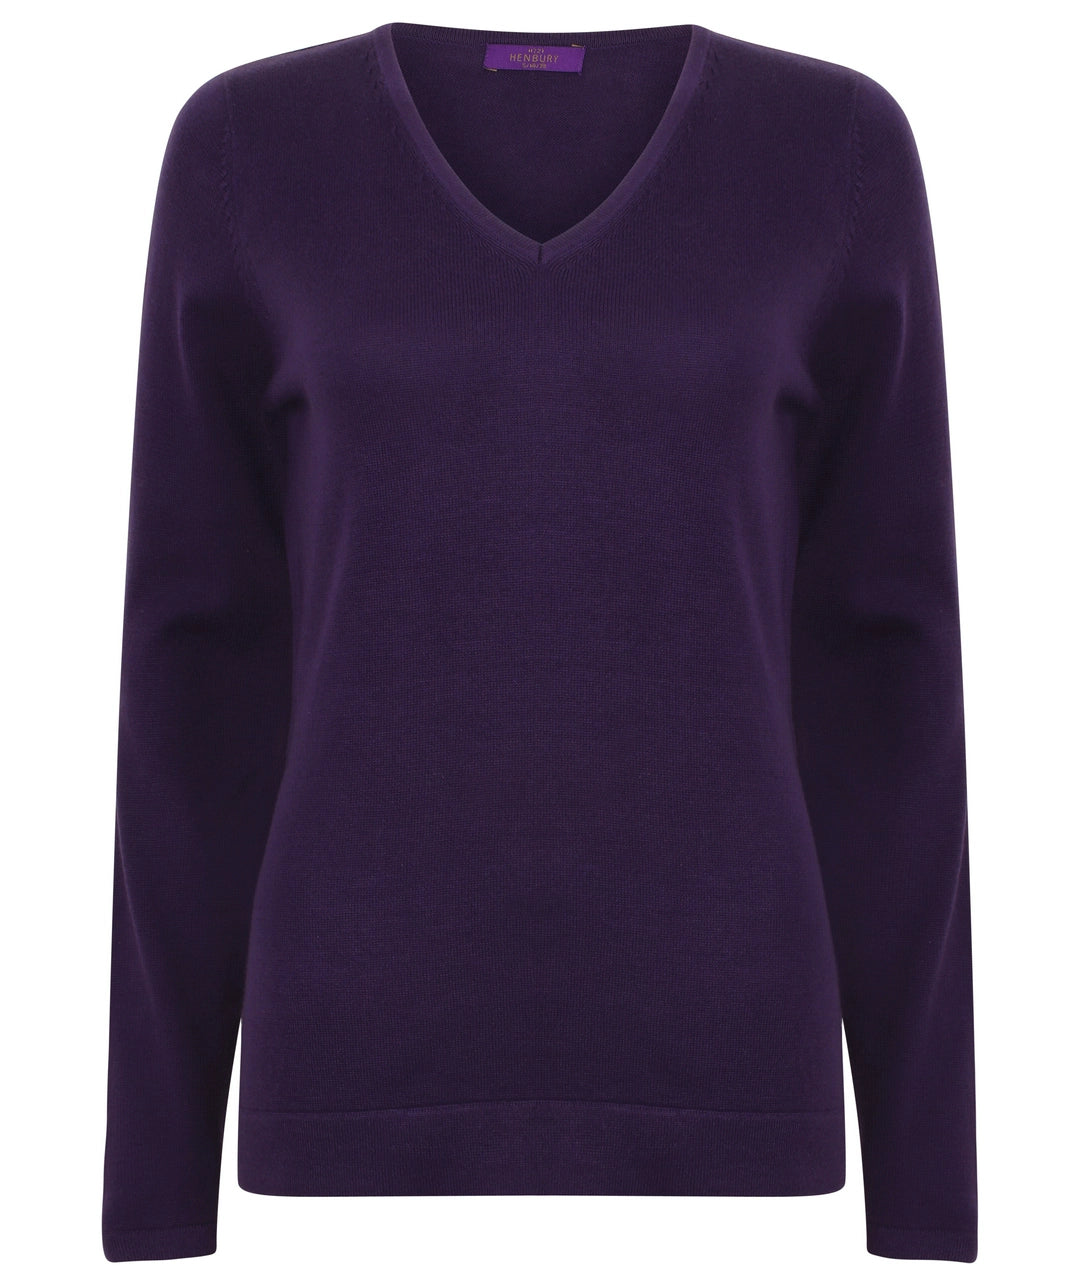 Henbury HB721 Ladies Lightweight Cotton Acrylic v-neck Sweater/Jumper - COOZO